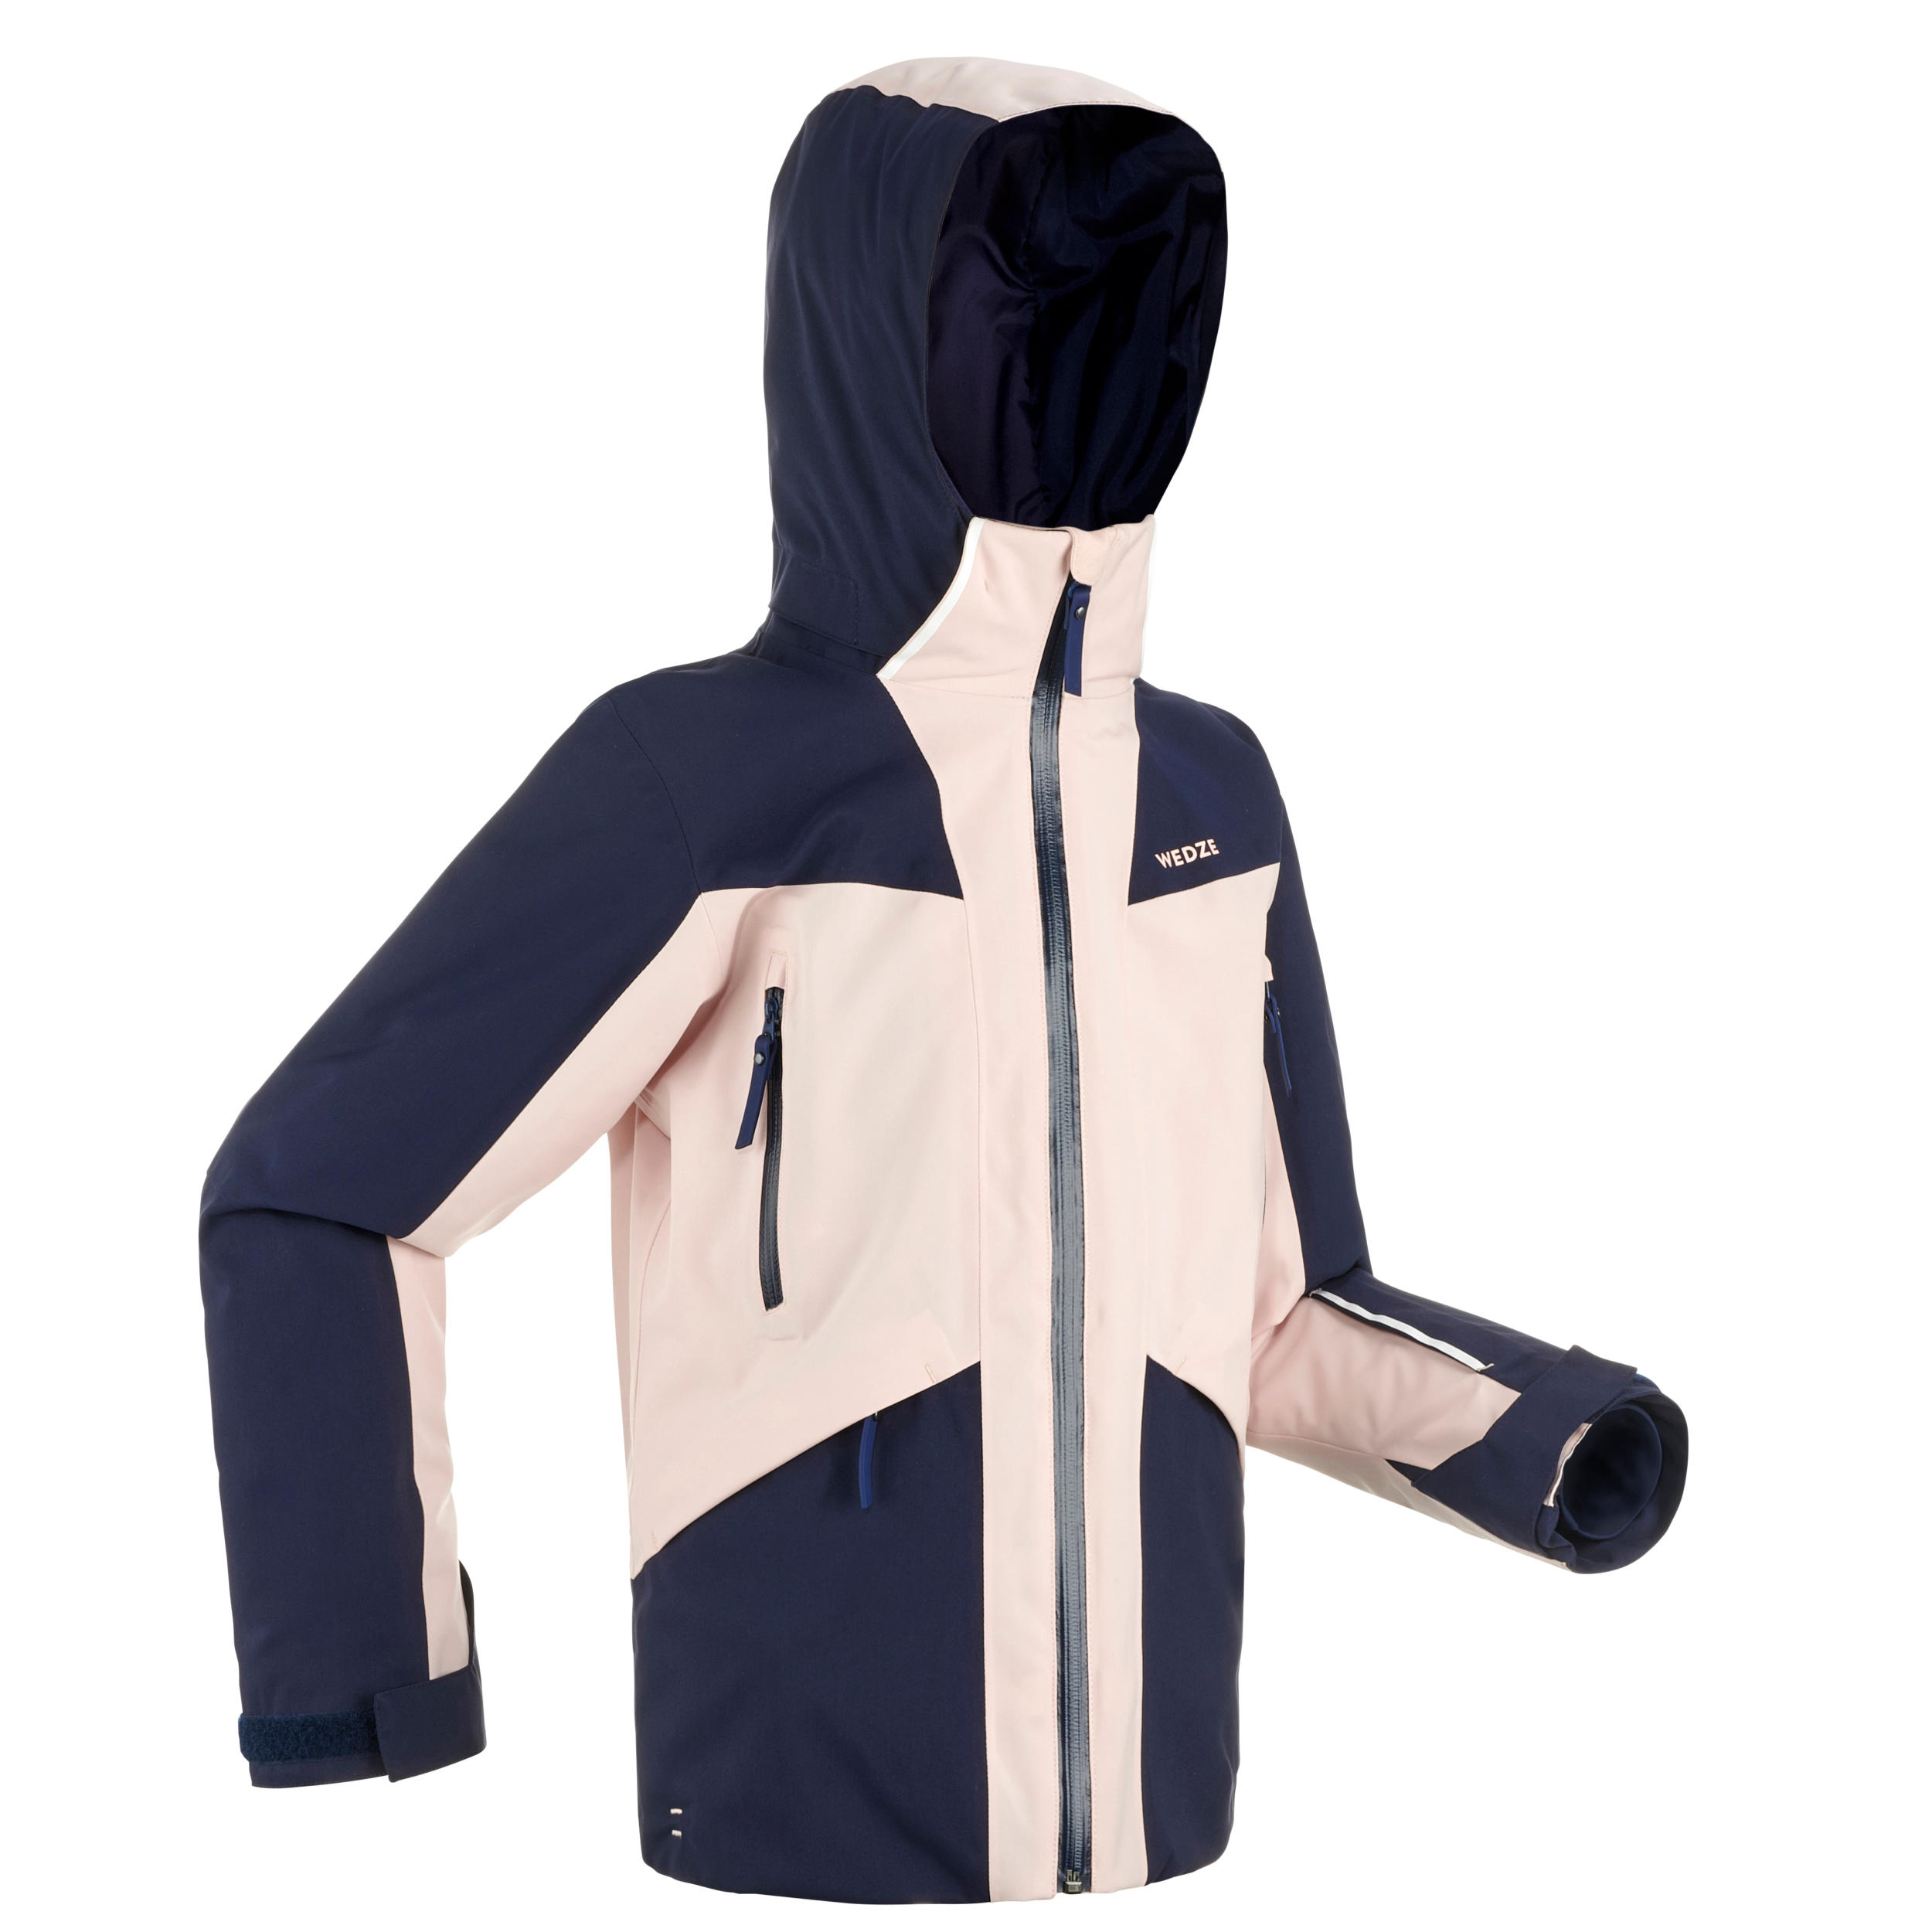 WEDZE Kids' Ski Jacket 900 - Navy Blue and Powder Pink